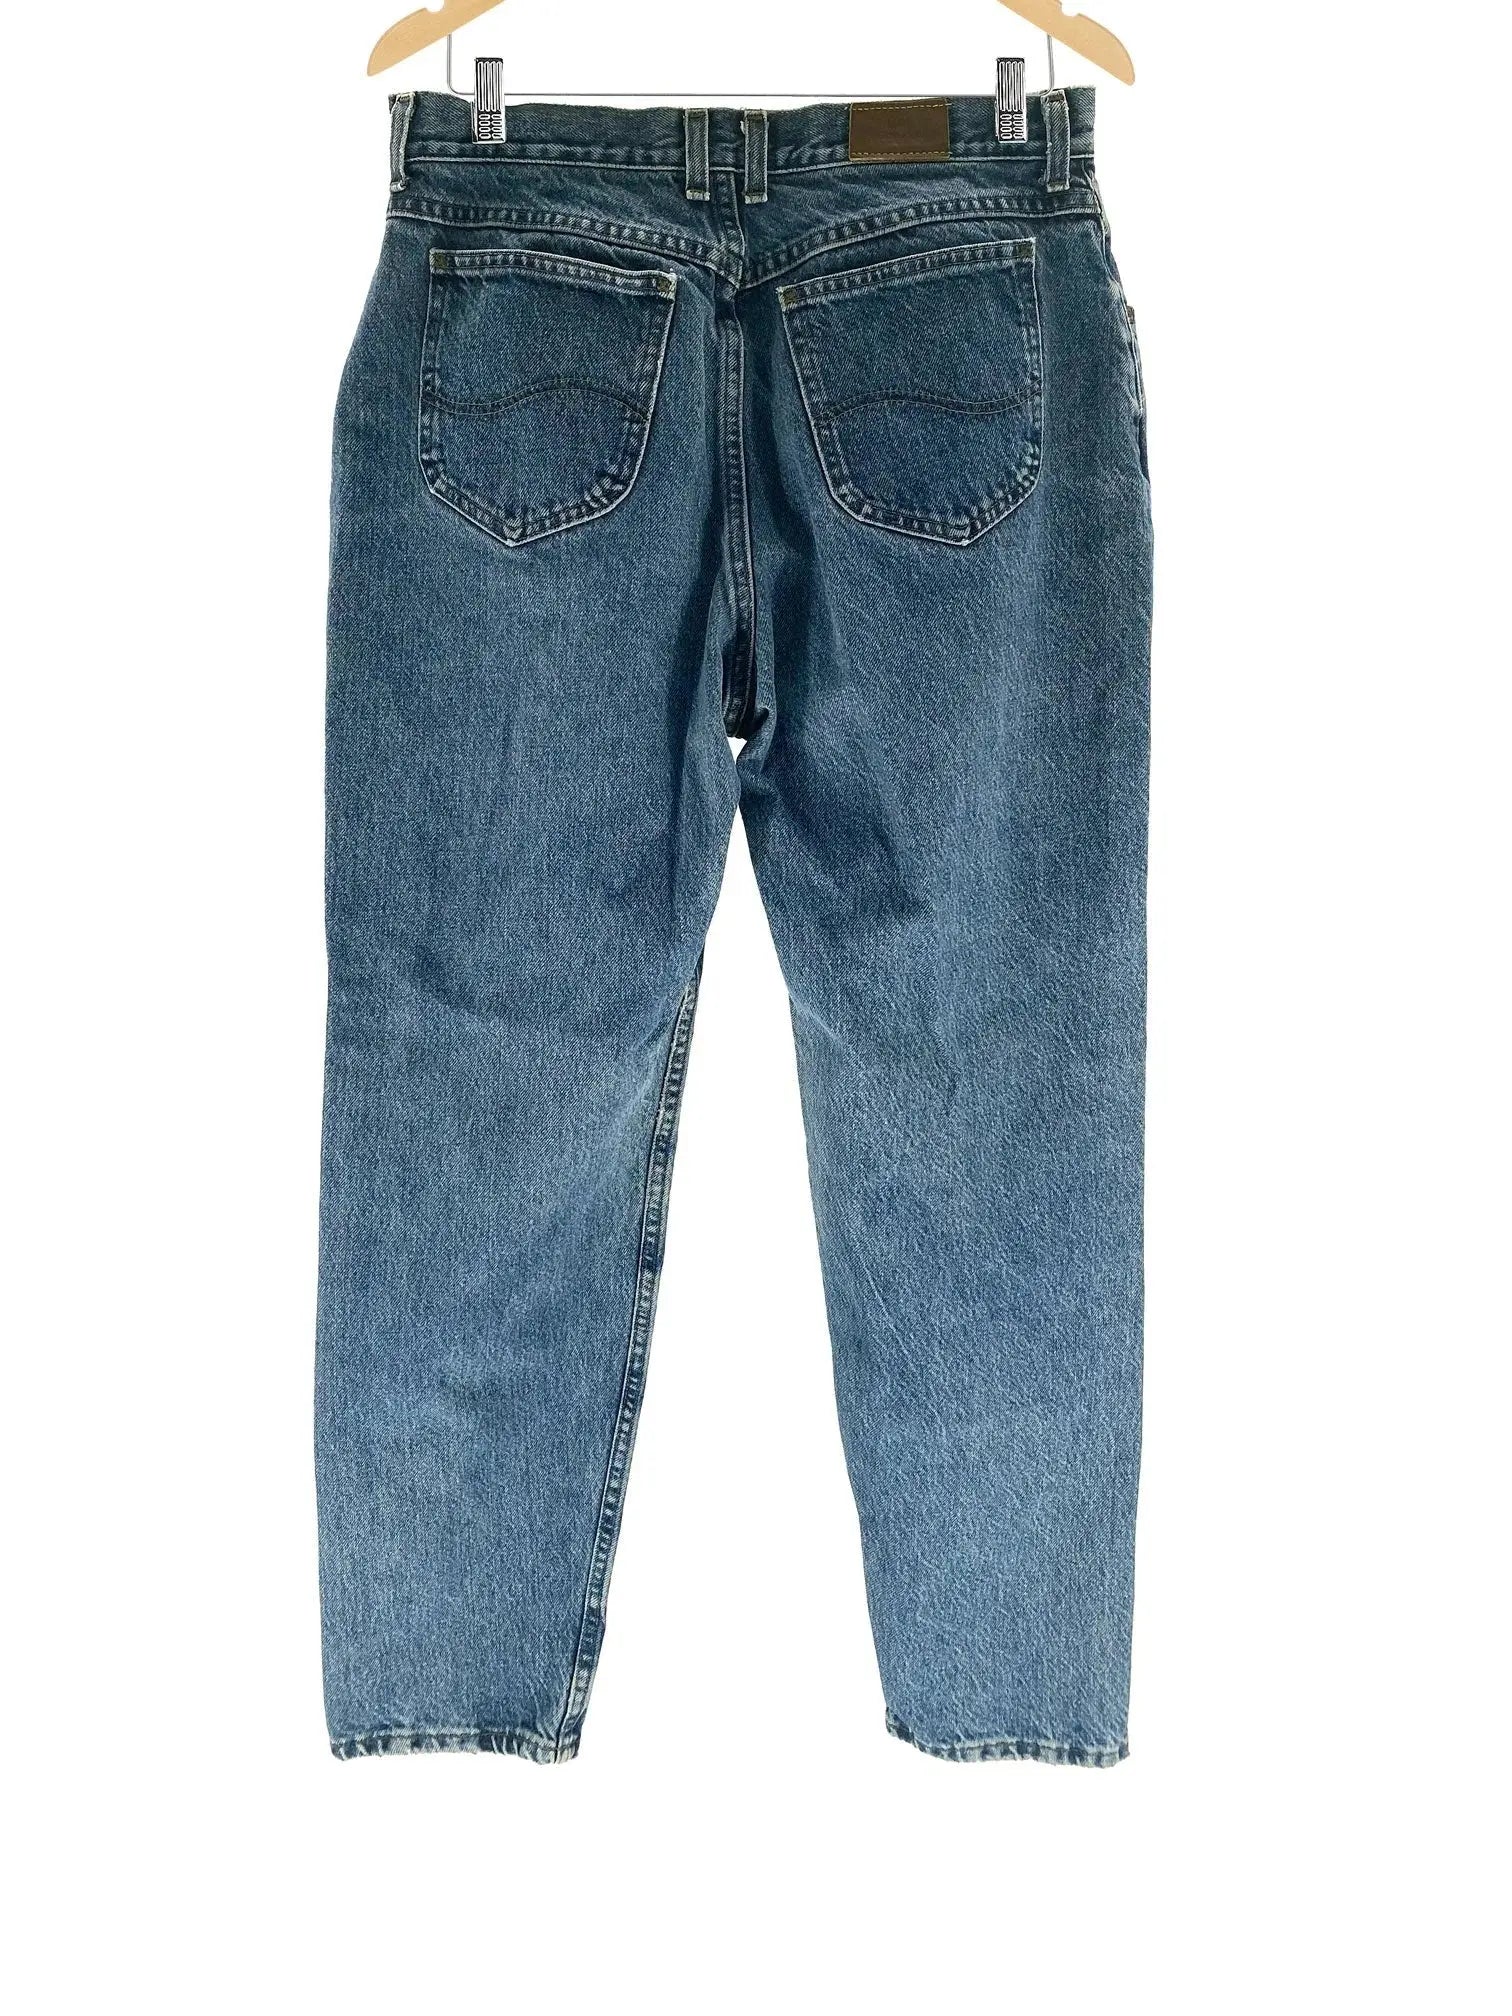 Lee Jeans Original Fit Straight Leg - High Rise - Women's 14 Medium (32x31) Great Lakes Reclaimed Denim